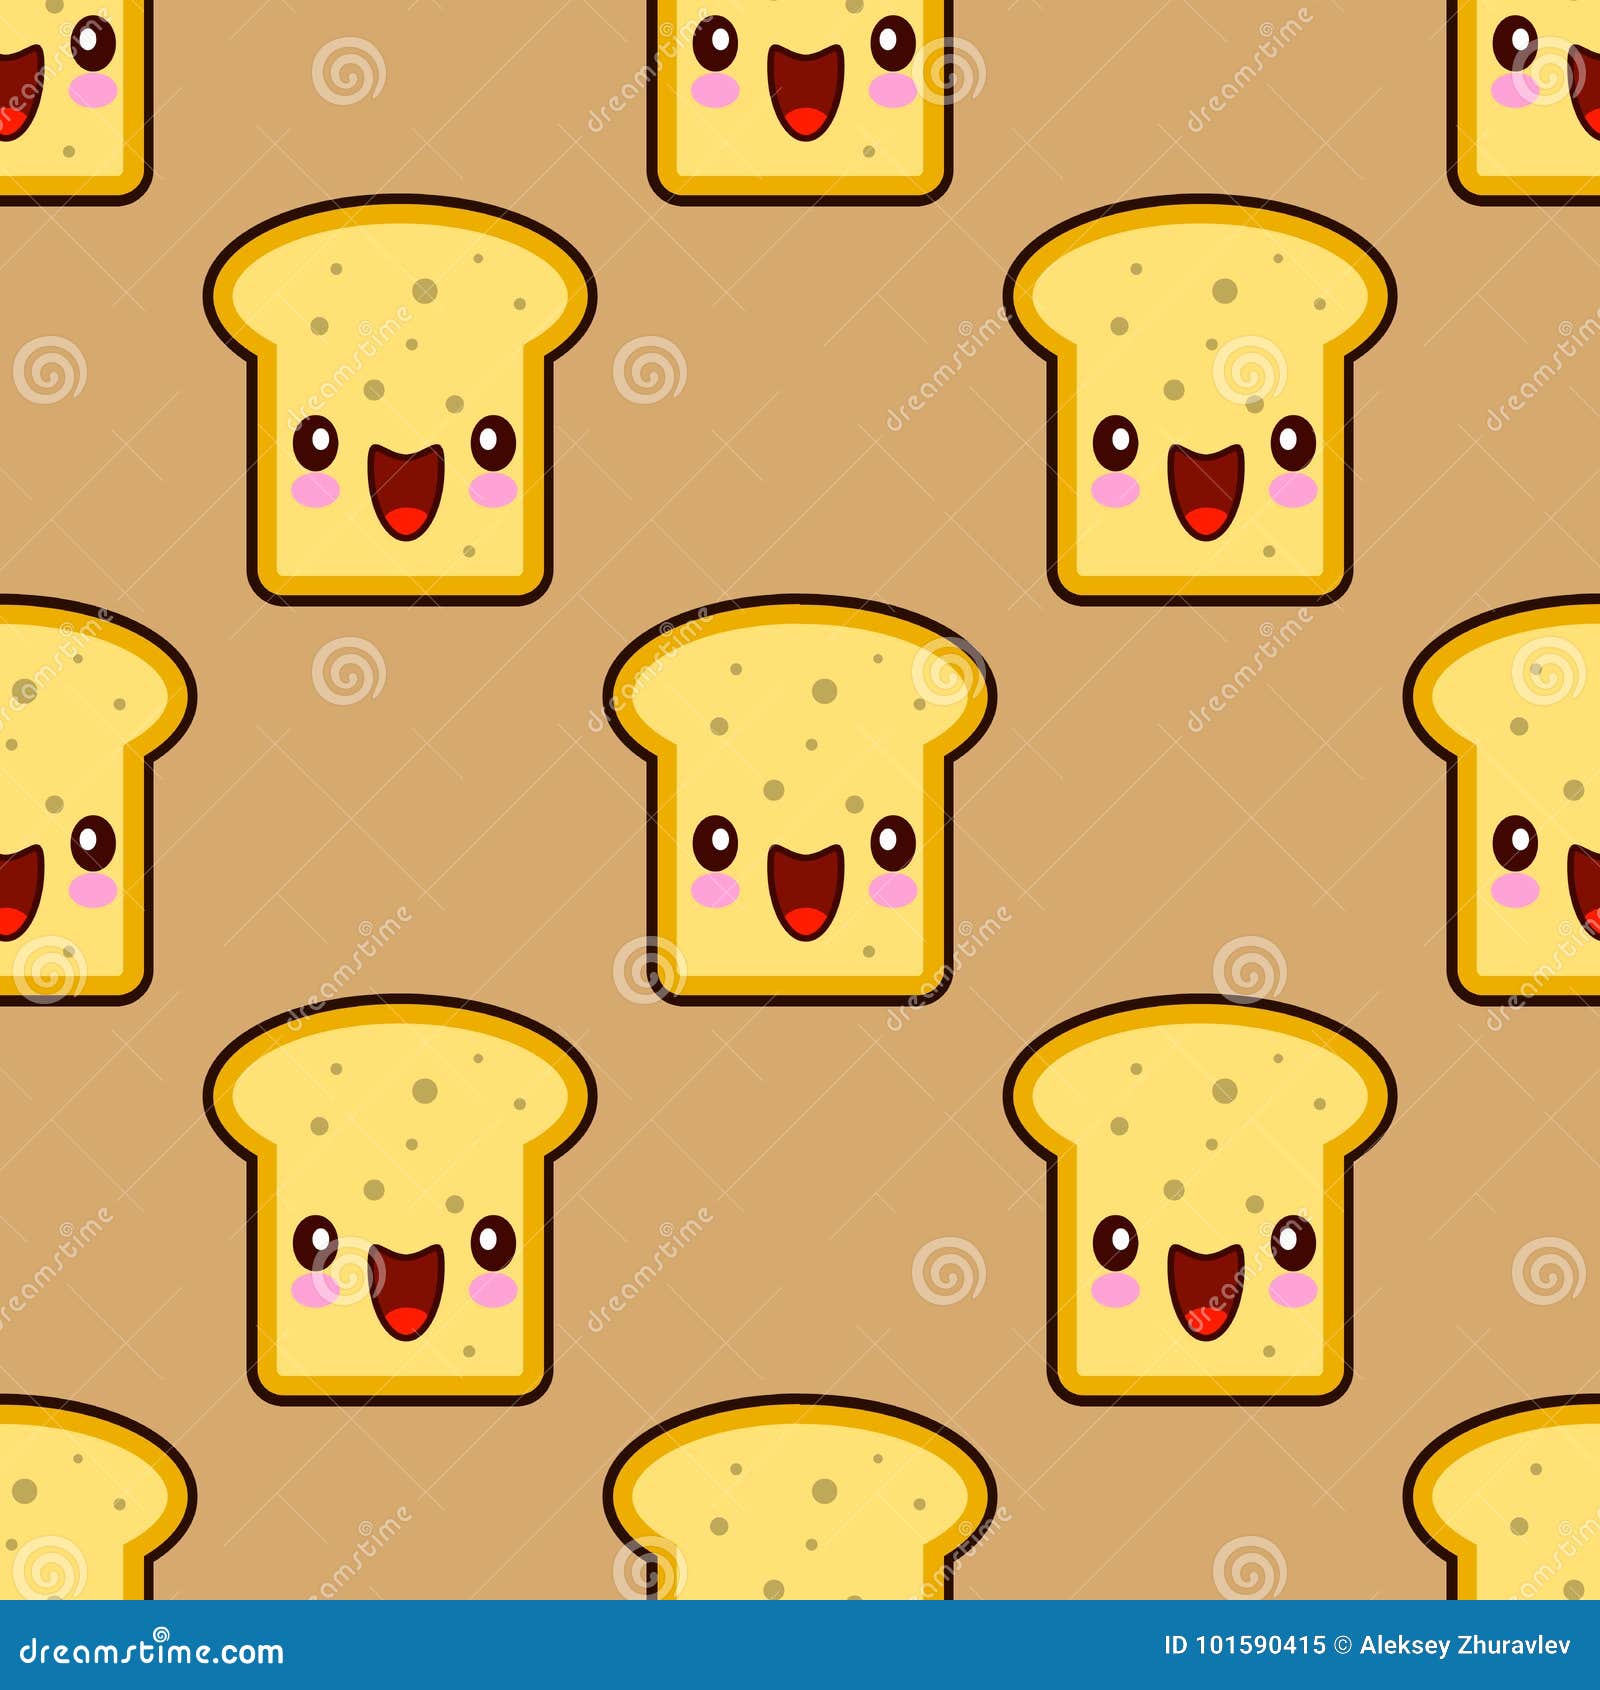 Cute Slice of Bread Kawaii Emoji Cartoon Wheat Bread Patch Applique Embroidery